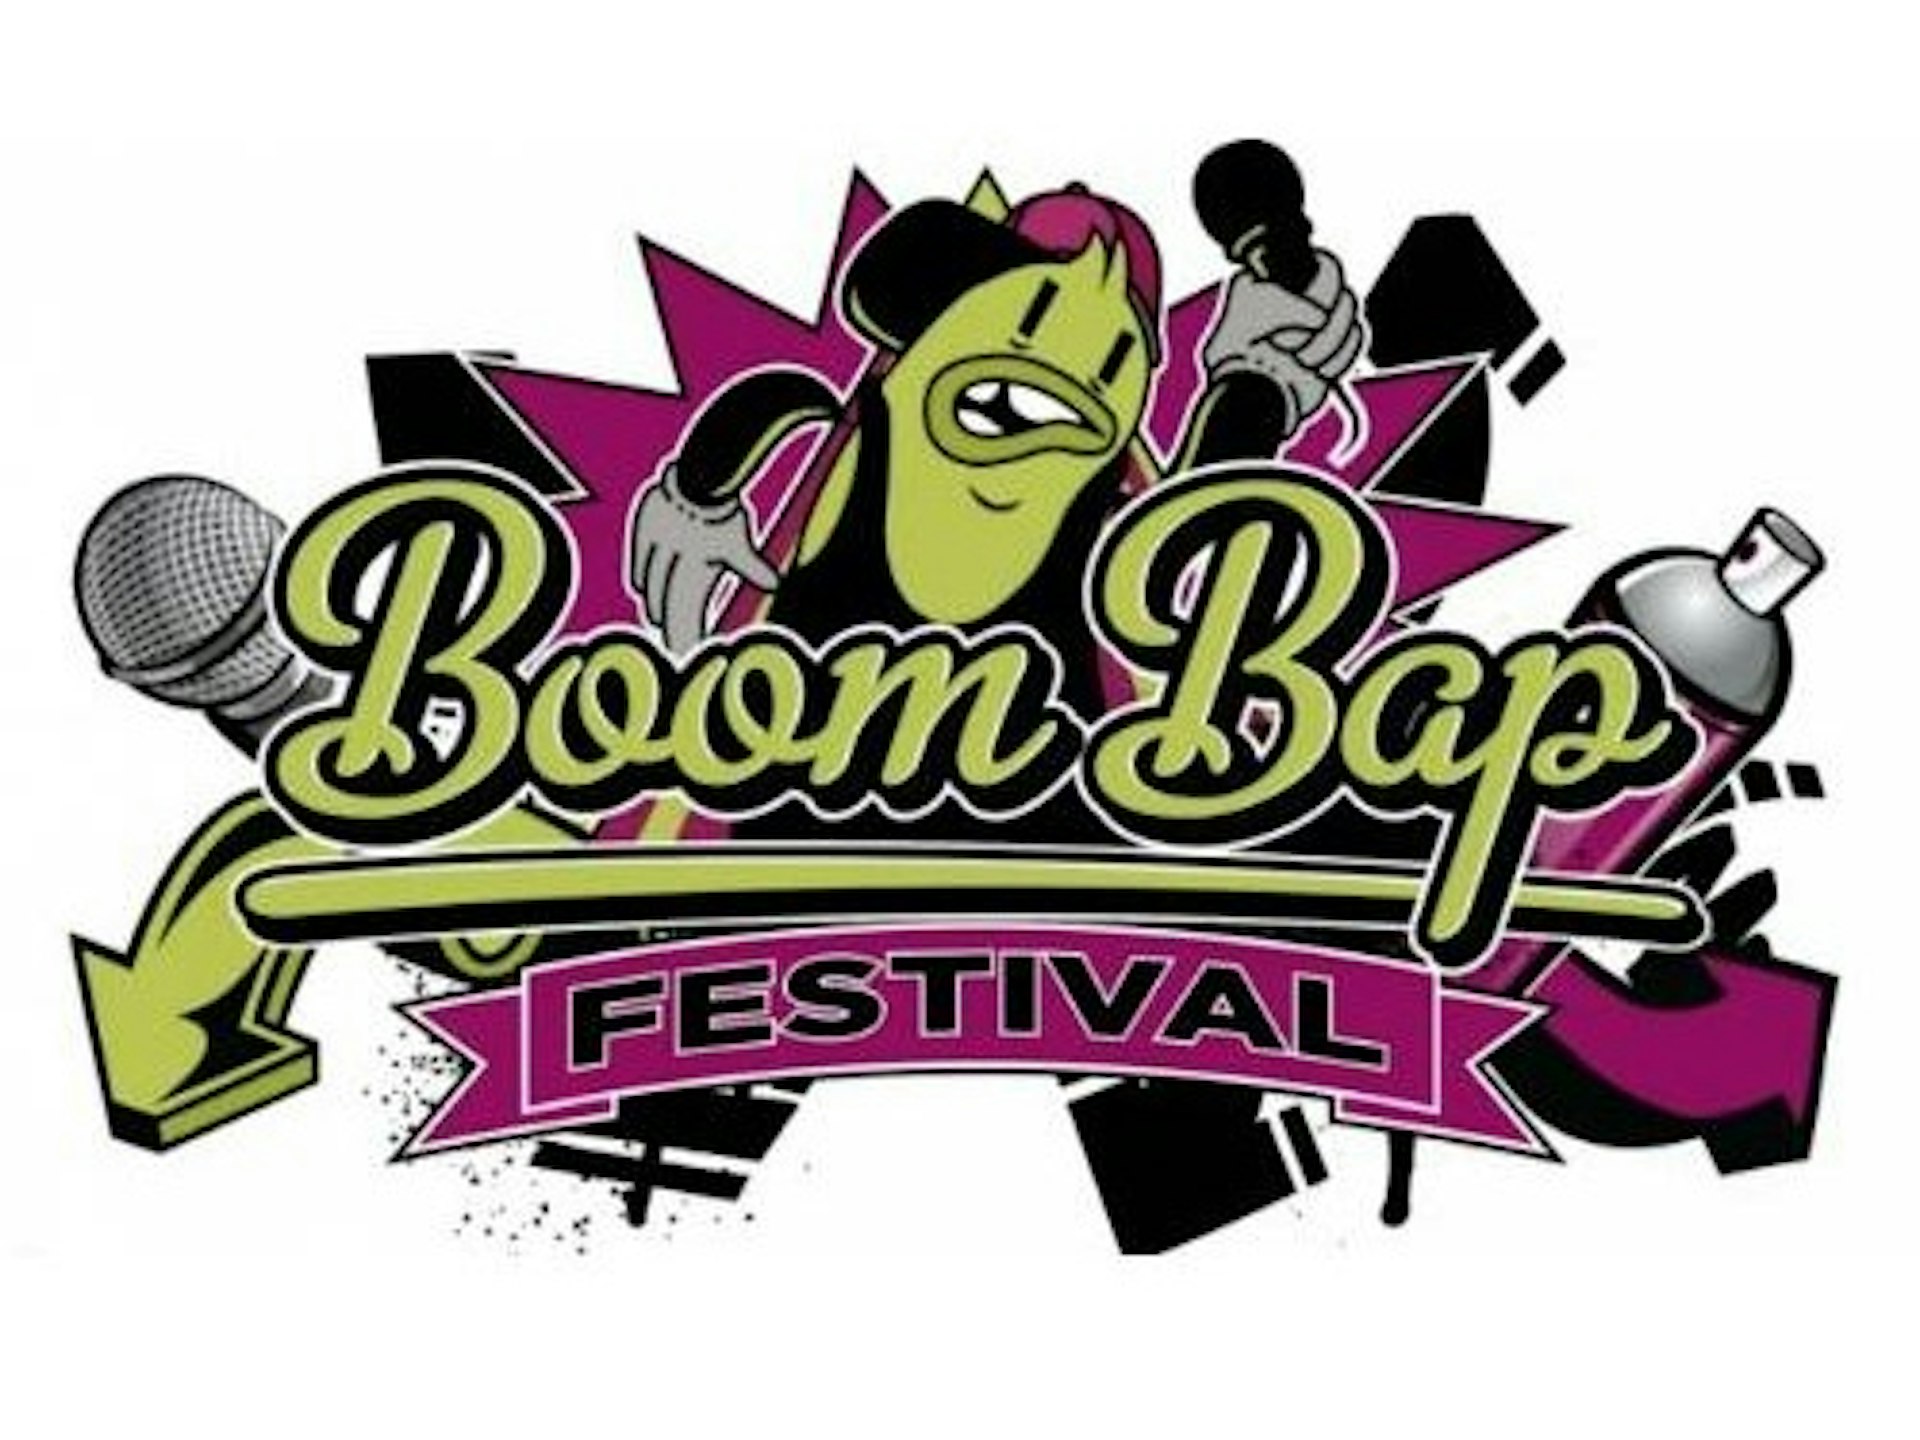 Boom Bap Festival